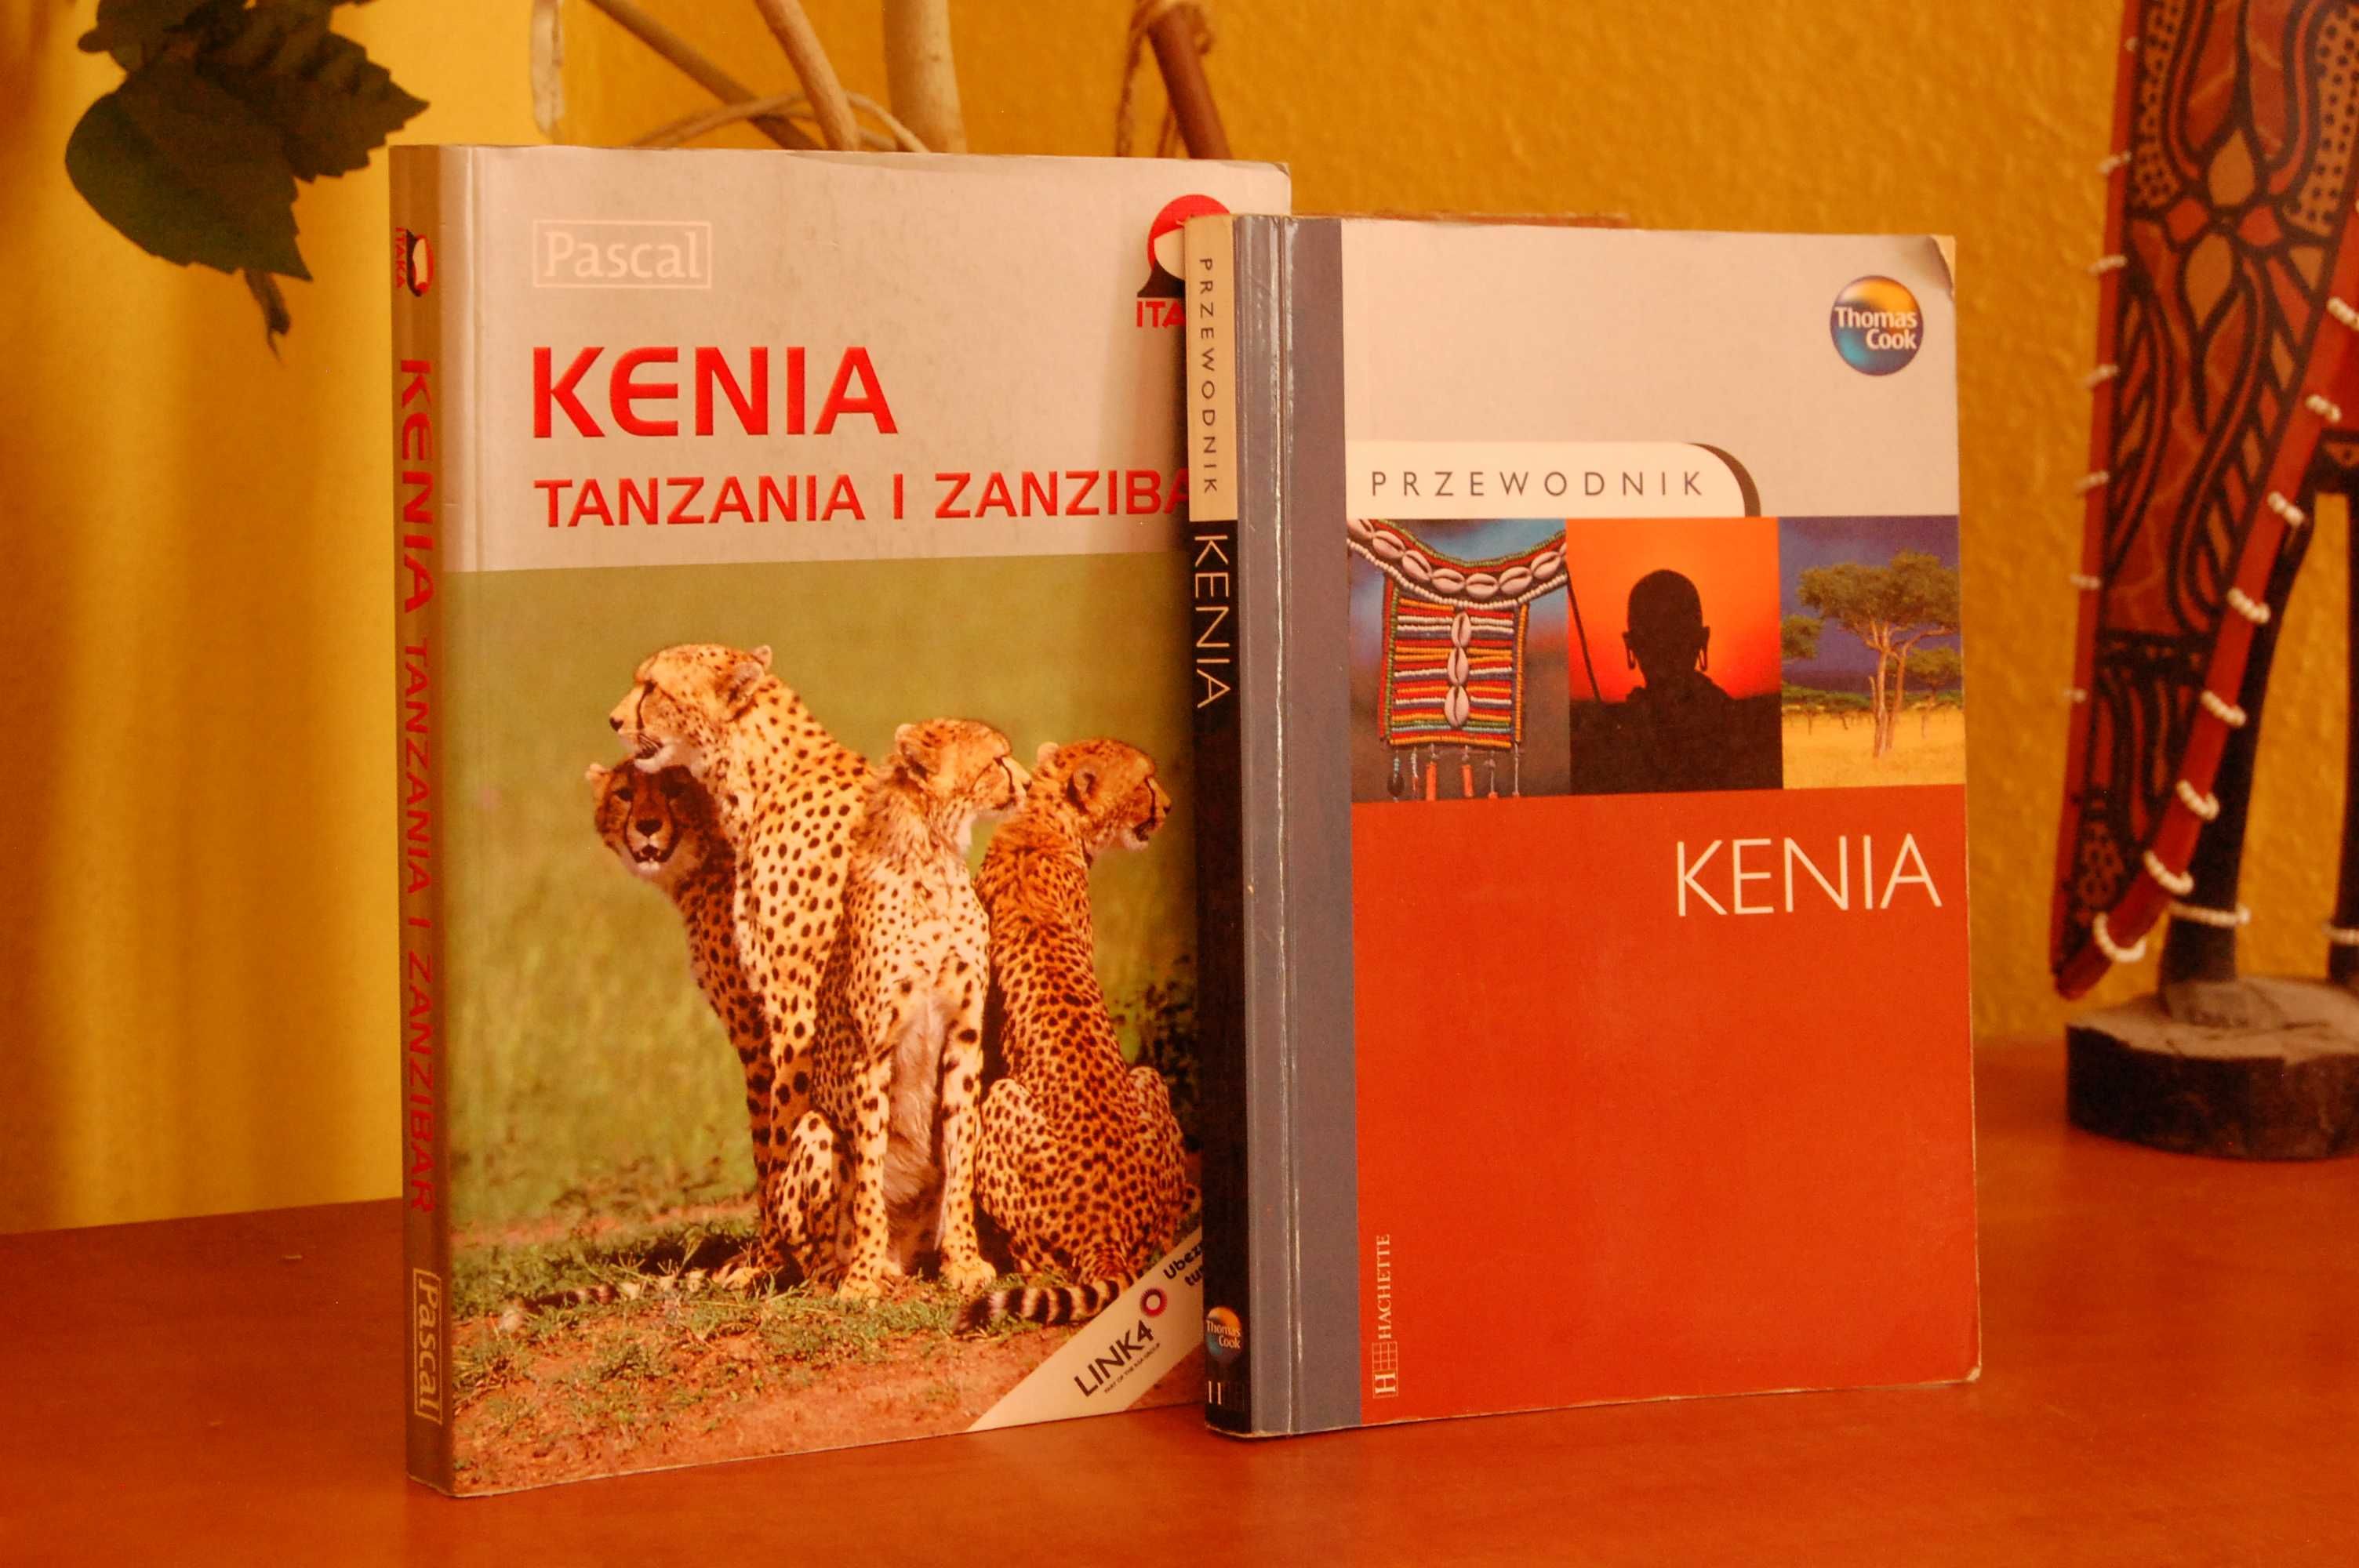 Kenia Thomas Cook /Kenia, Tanzania i Zanzibar Przewodnik